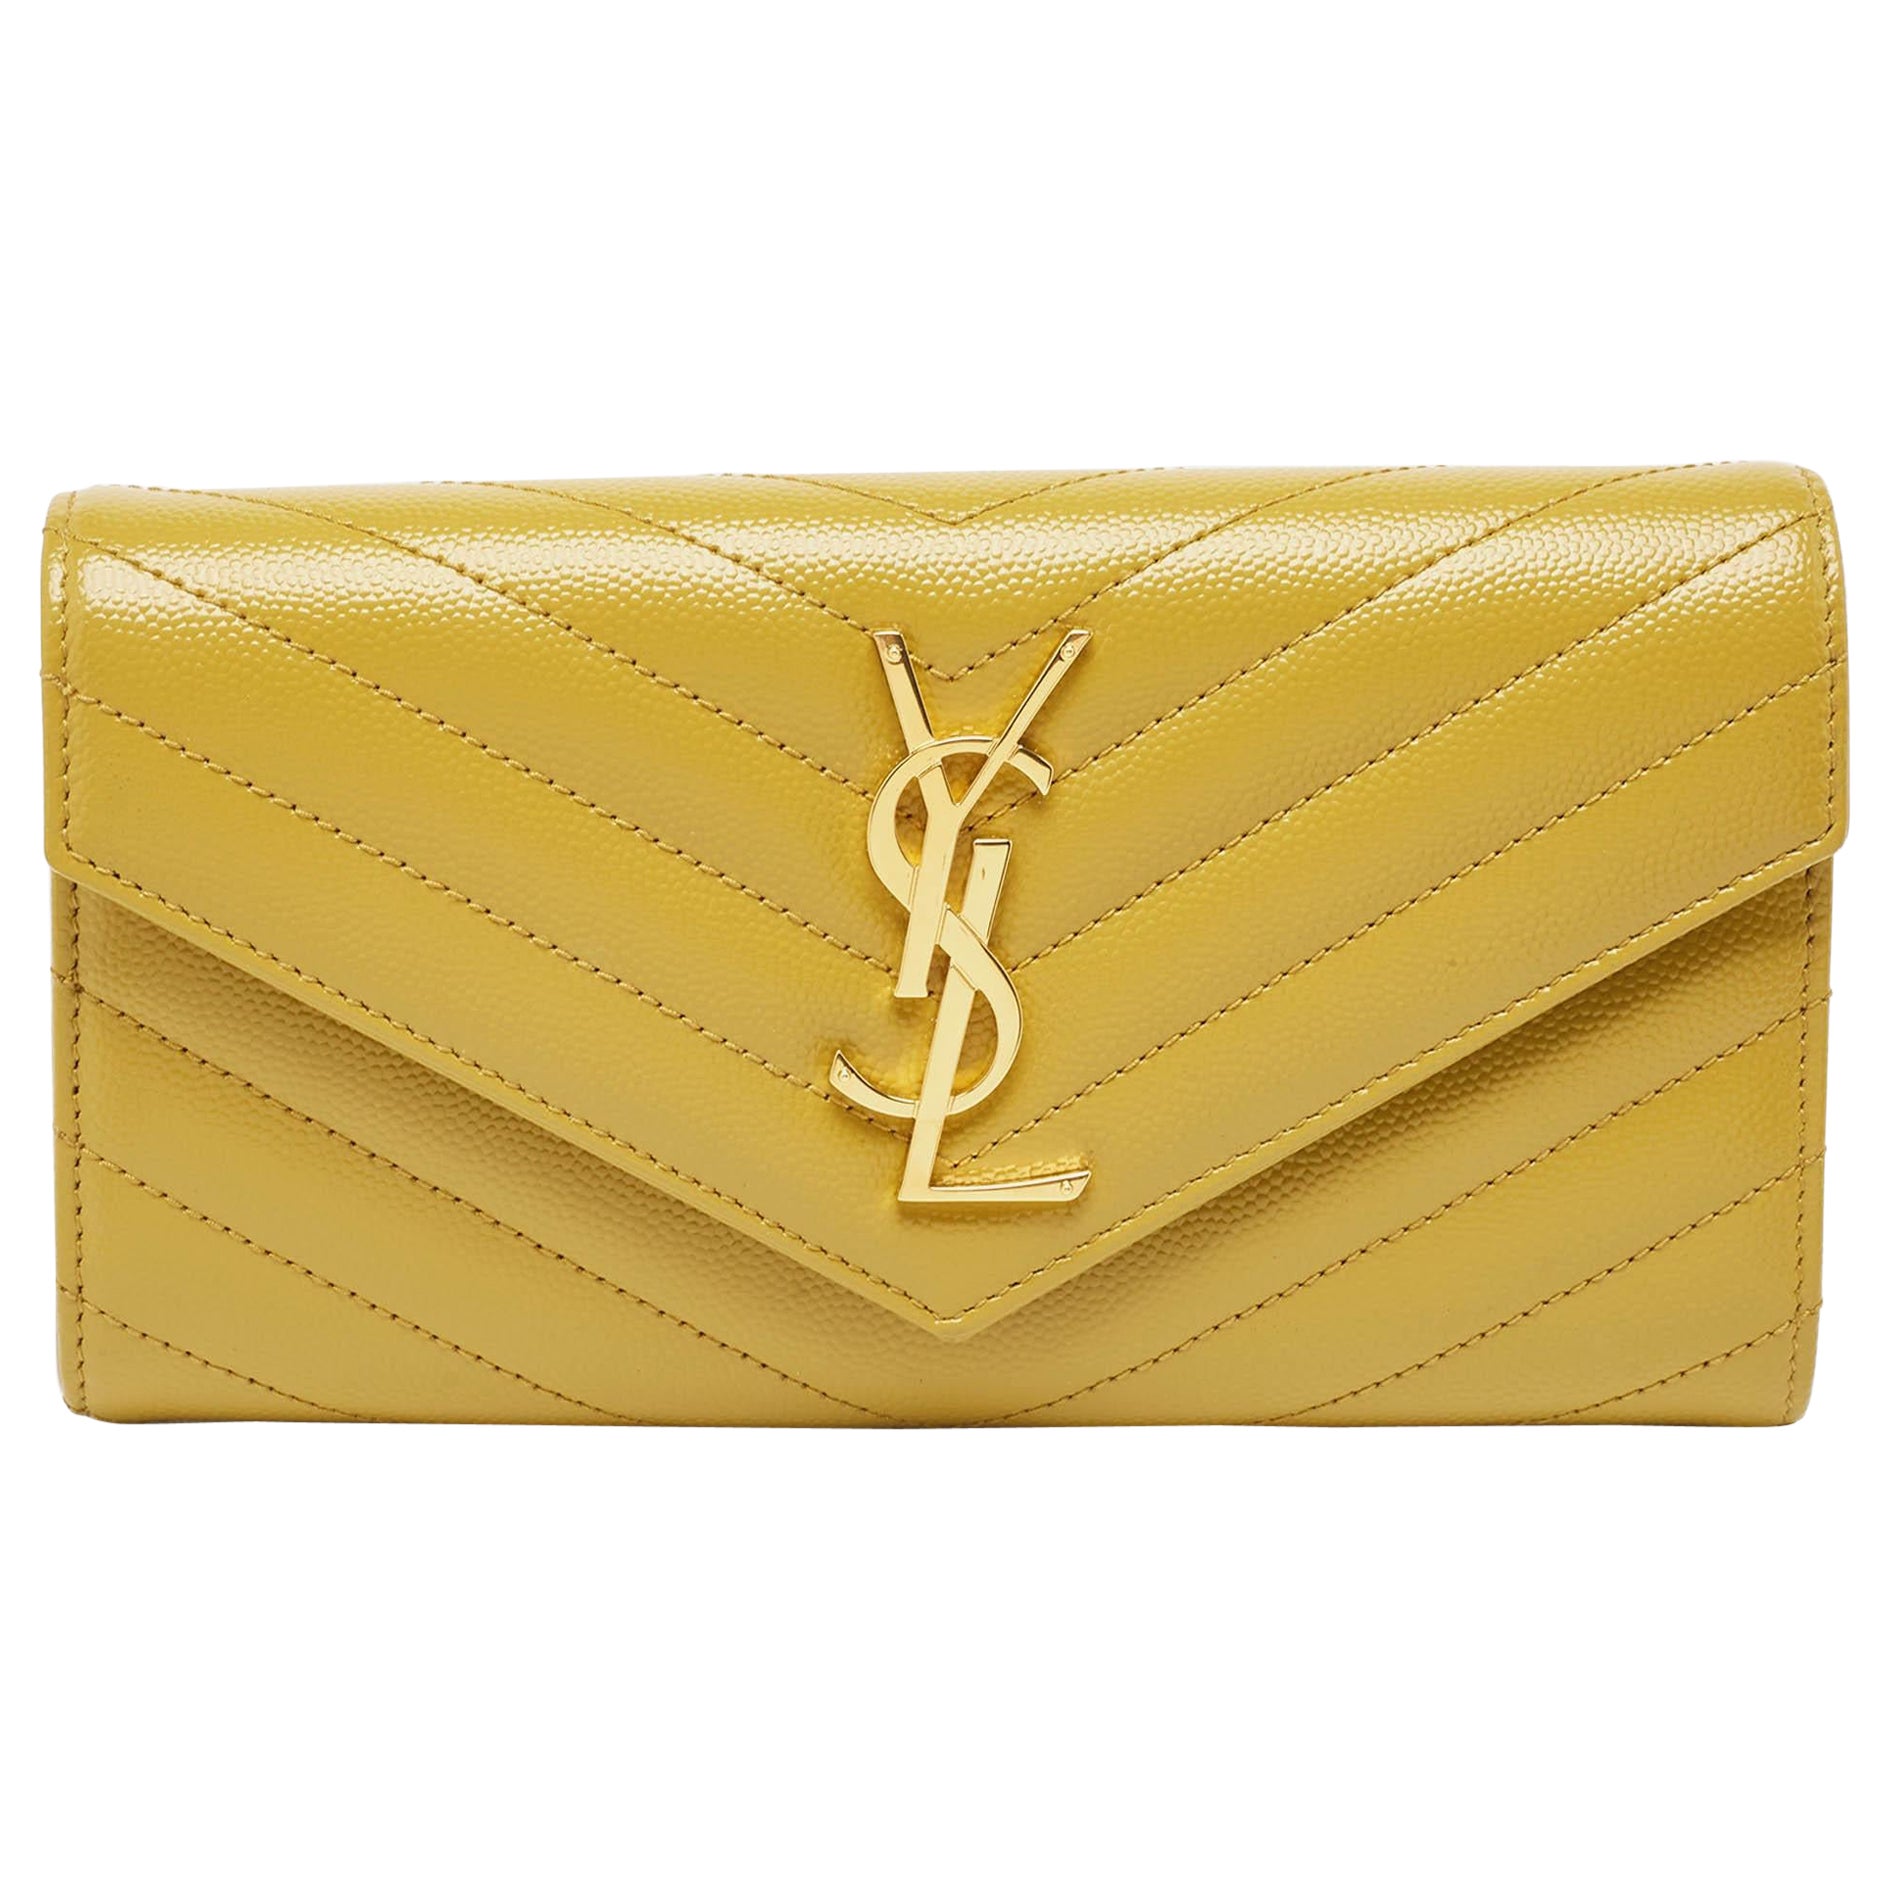 Where can I buy an Yves Saint Laurent Fringe purse?